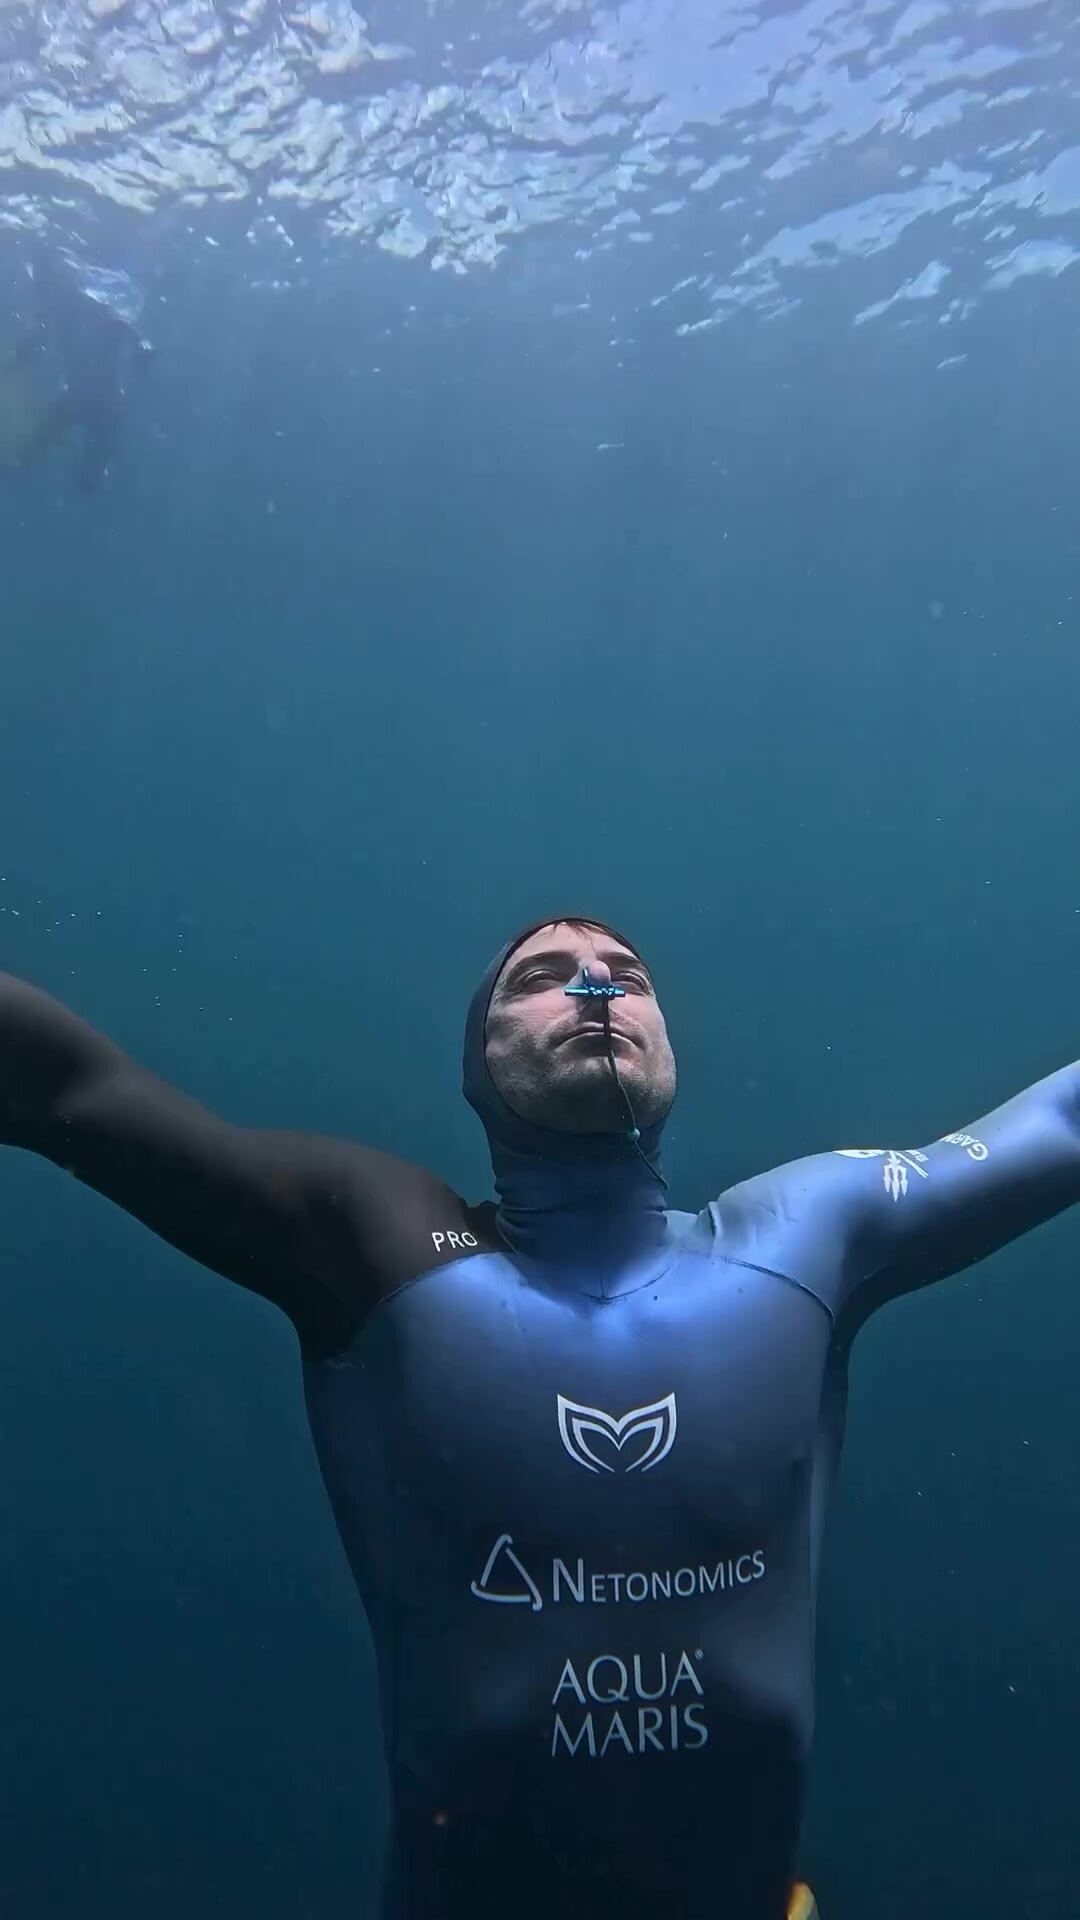 Barefaced underwater freediver surfacing